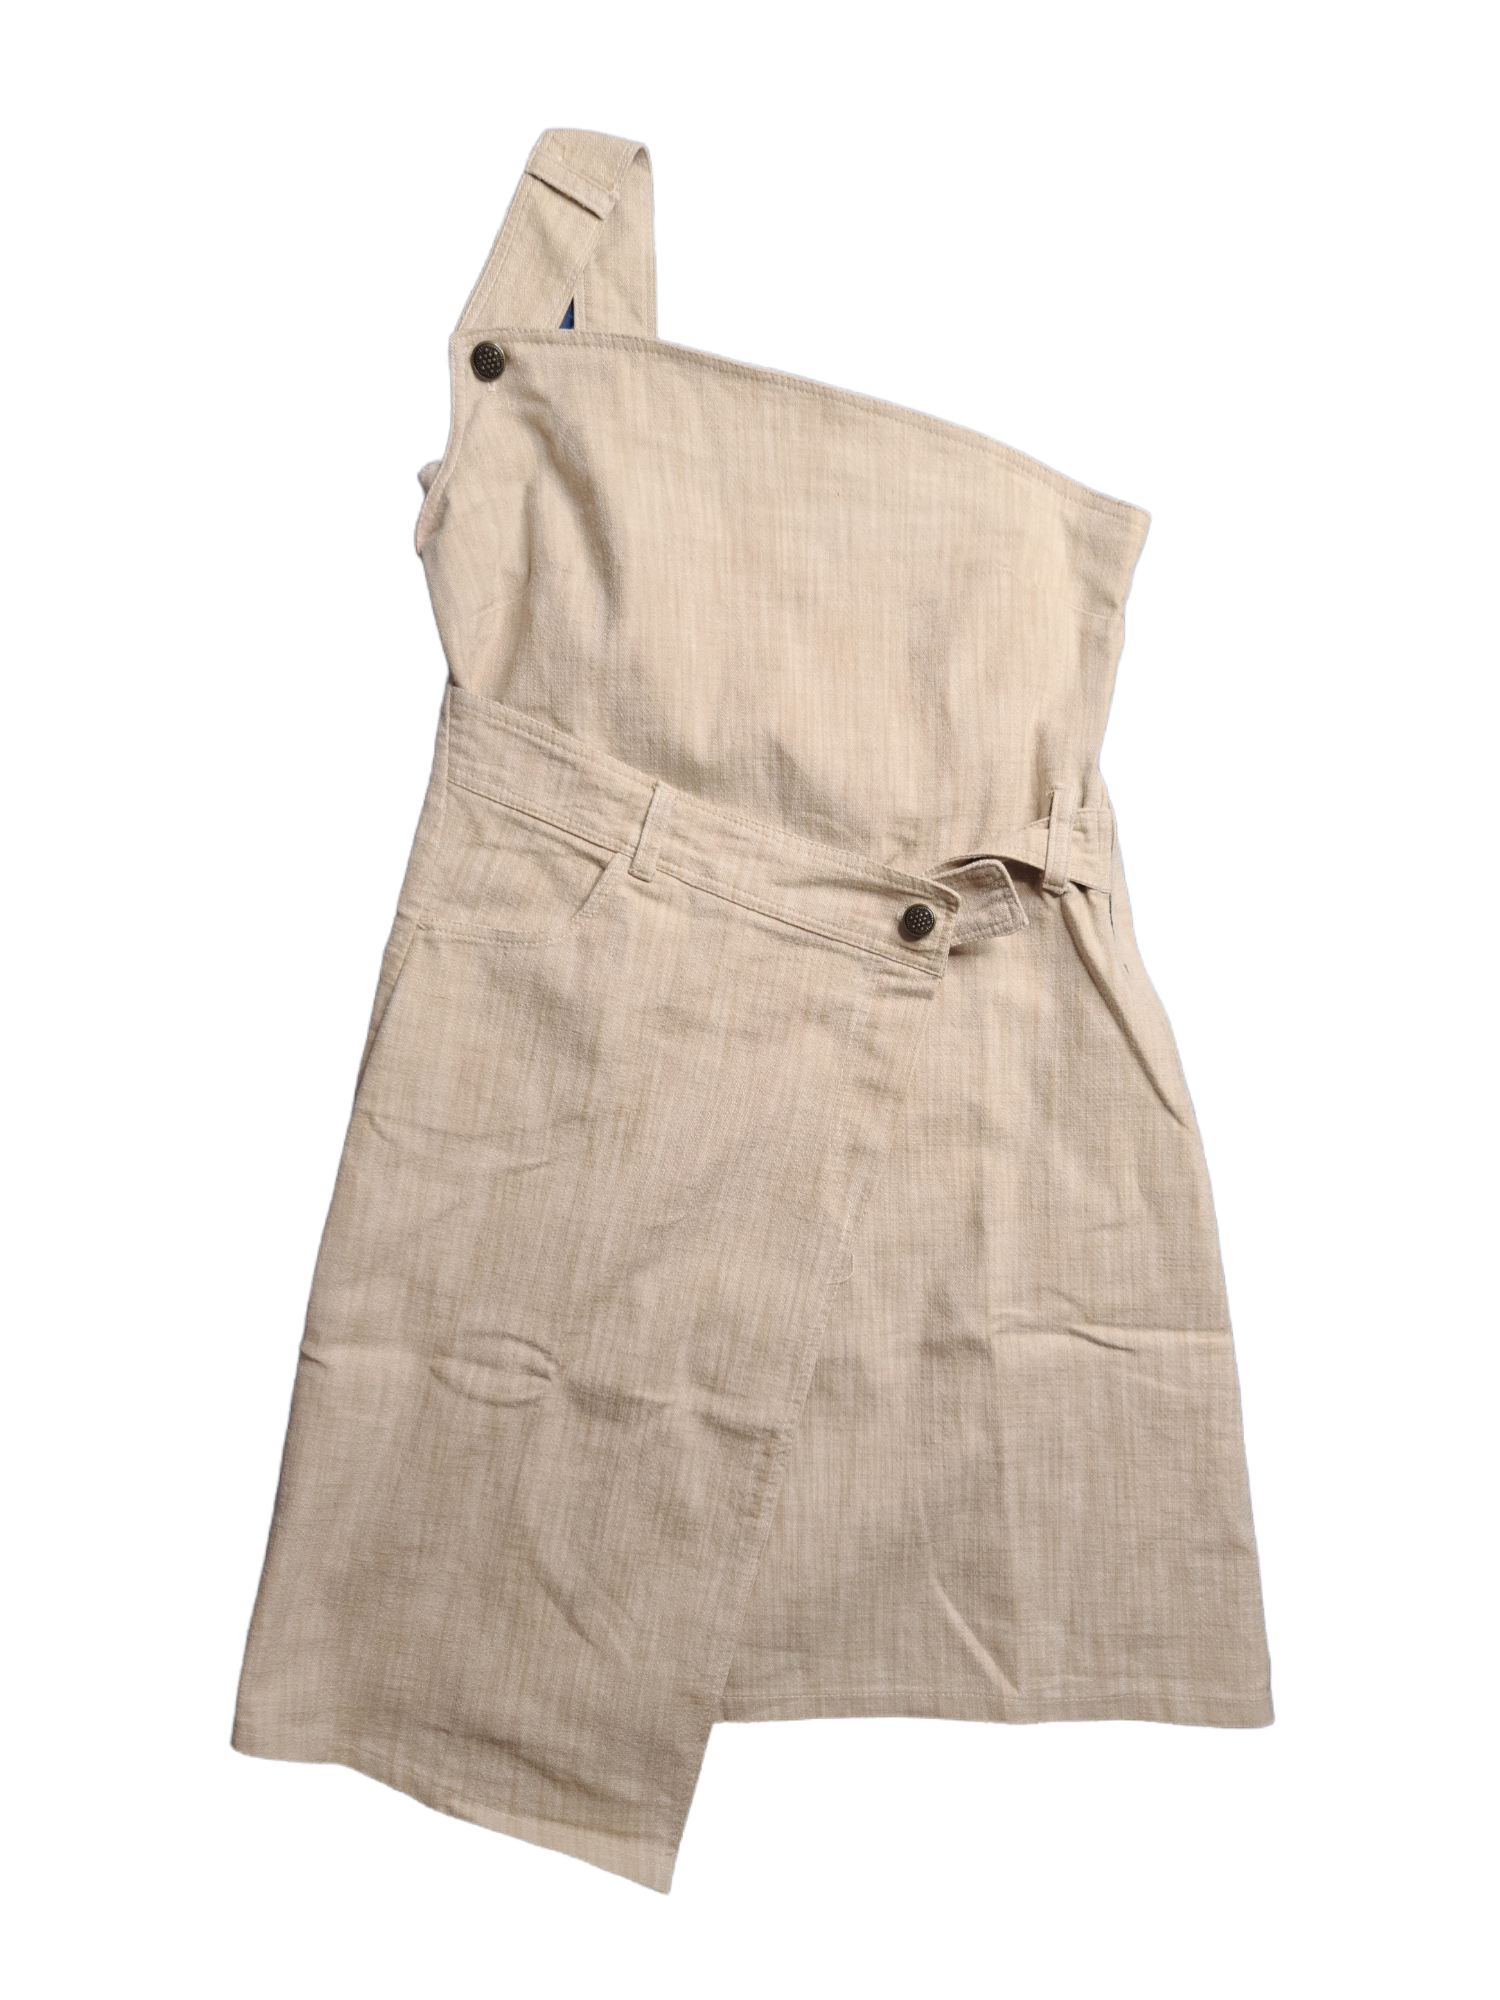 Robe vintage harajuku subverzive basics archive fashion neutral style asymetrique